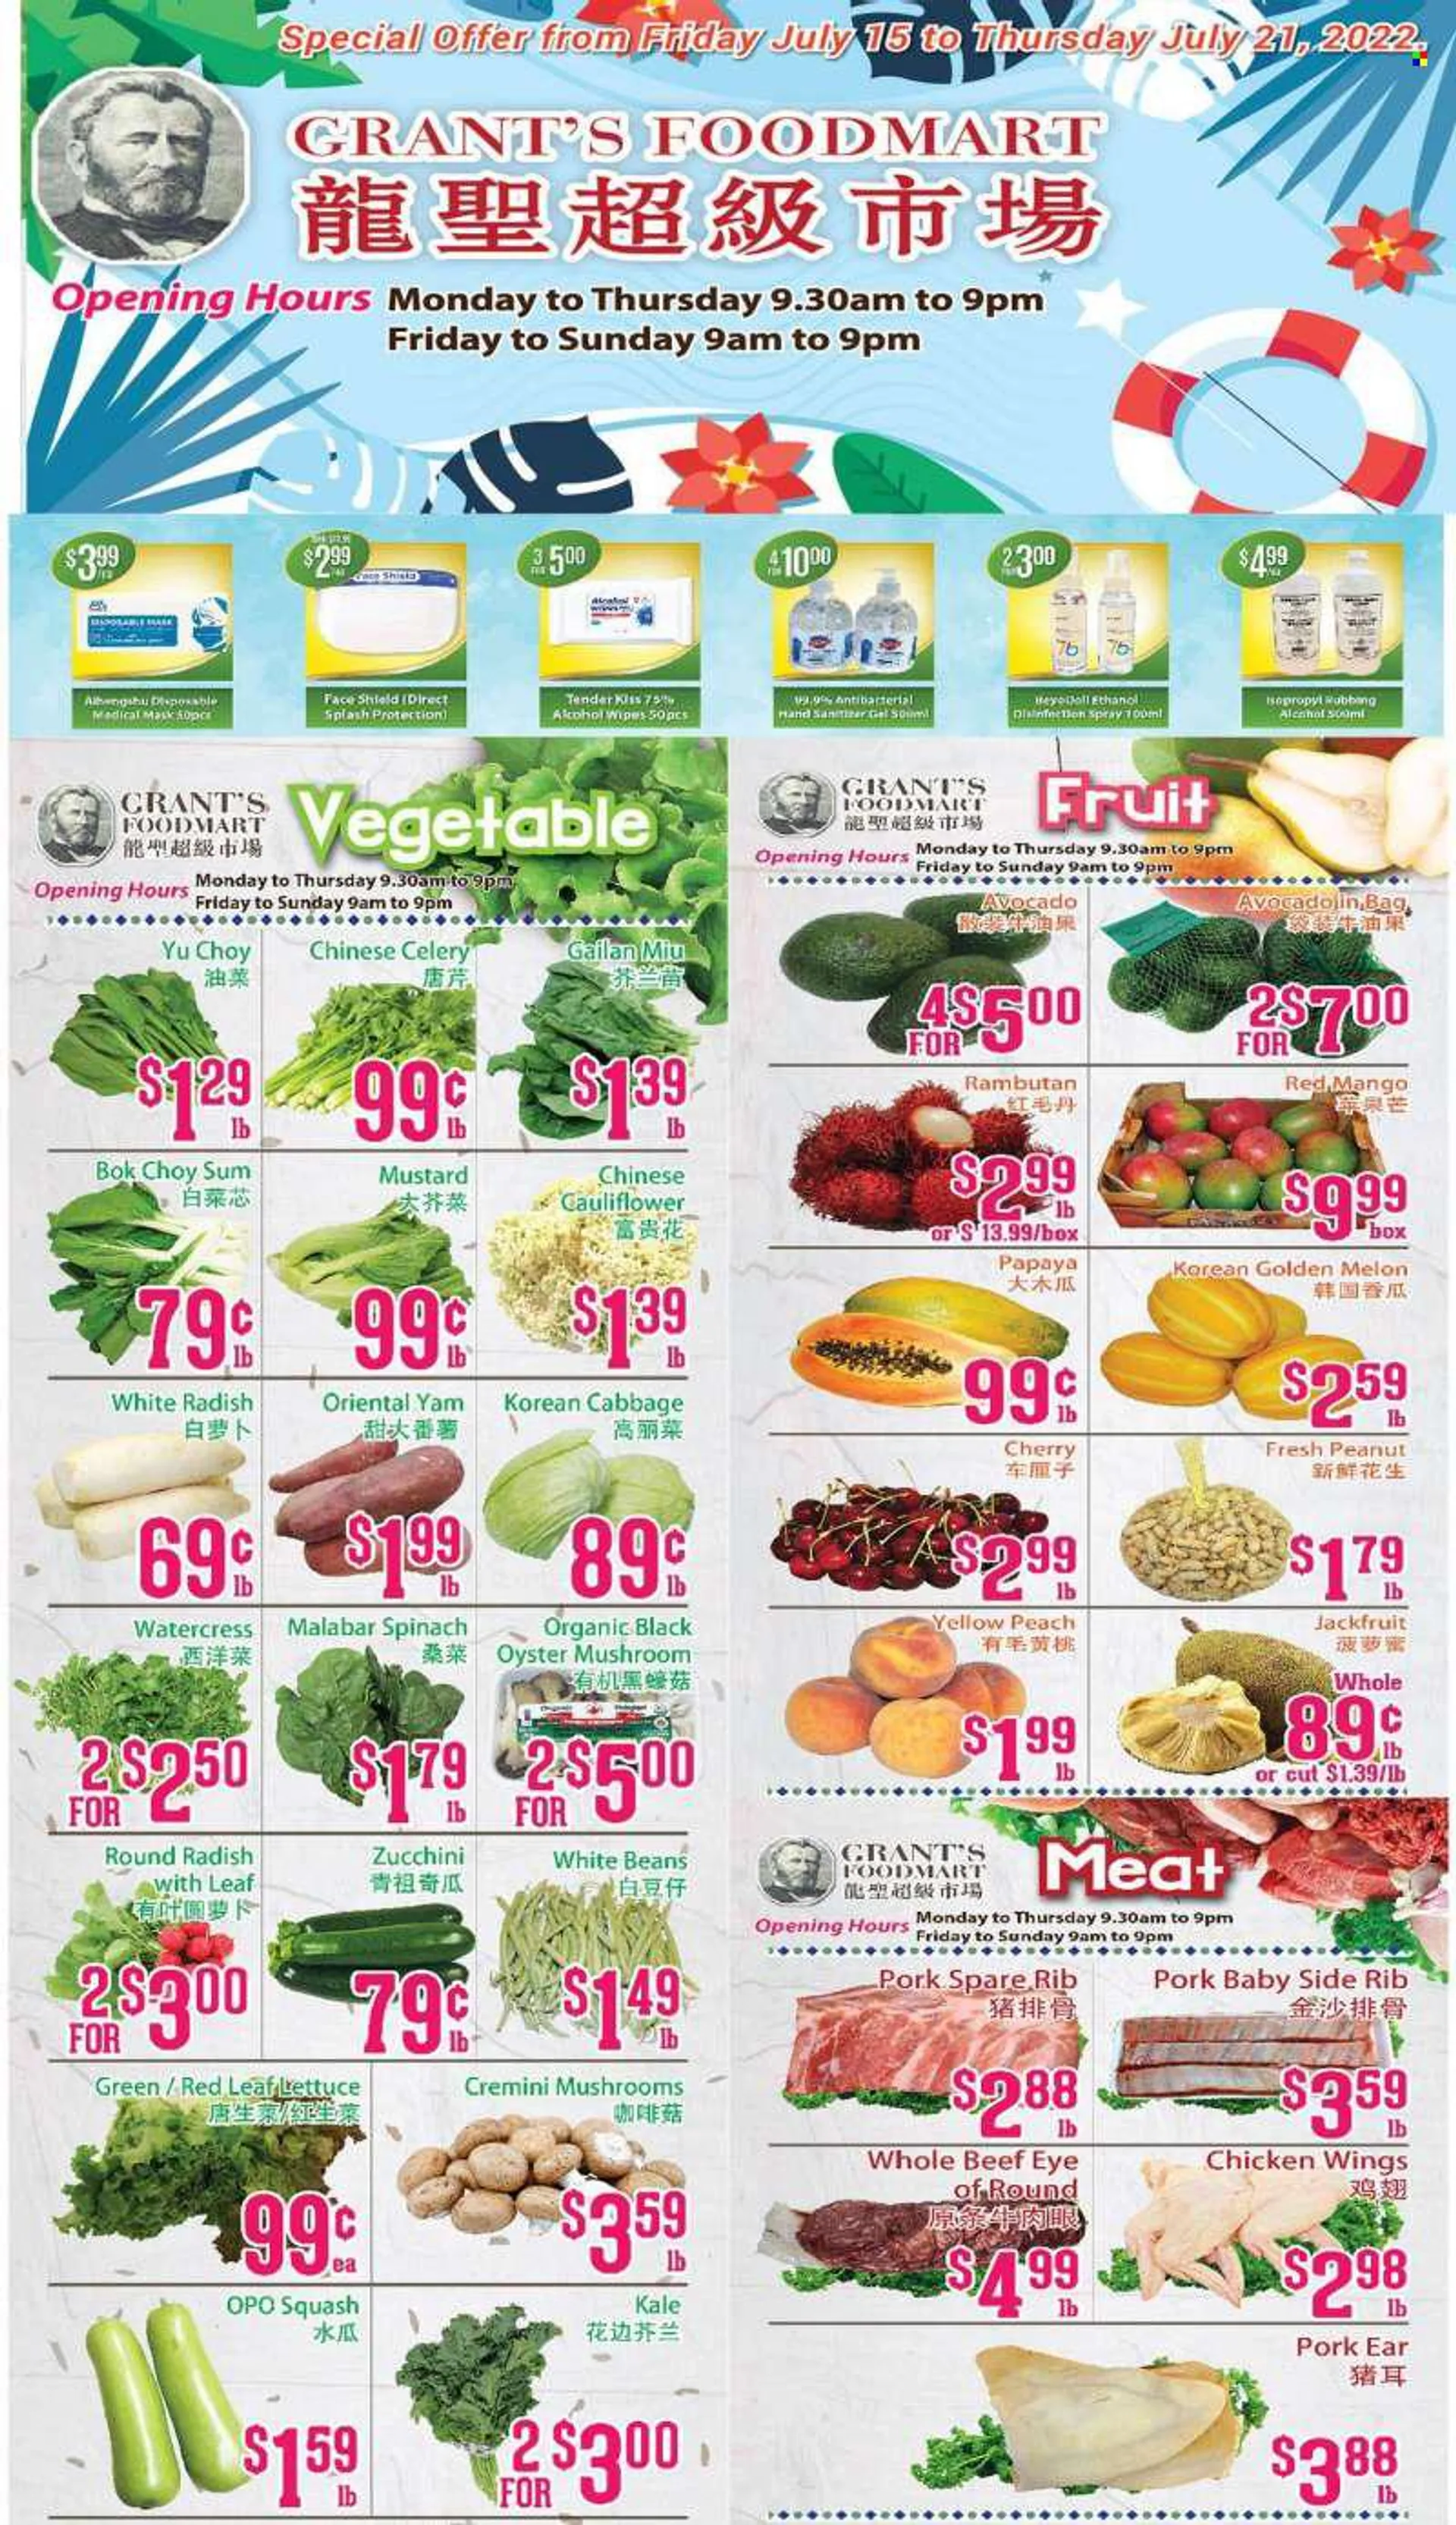 Grants Foodmart Flyer - July 15, 2022 - July 21, 2022 - Sales products - oyster mushrooms, mushroom, beans, bok choy, cabbage, cauliflower, celery, radishes, spinach, zucchini squash, kale, lettuce, white radish, avocado, cherries, papaya, melons, oysters